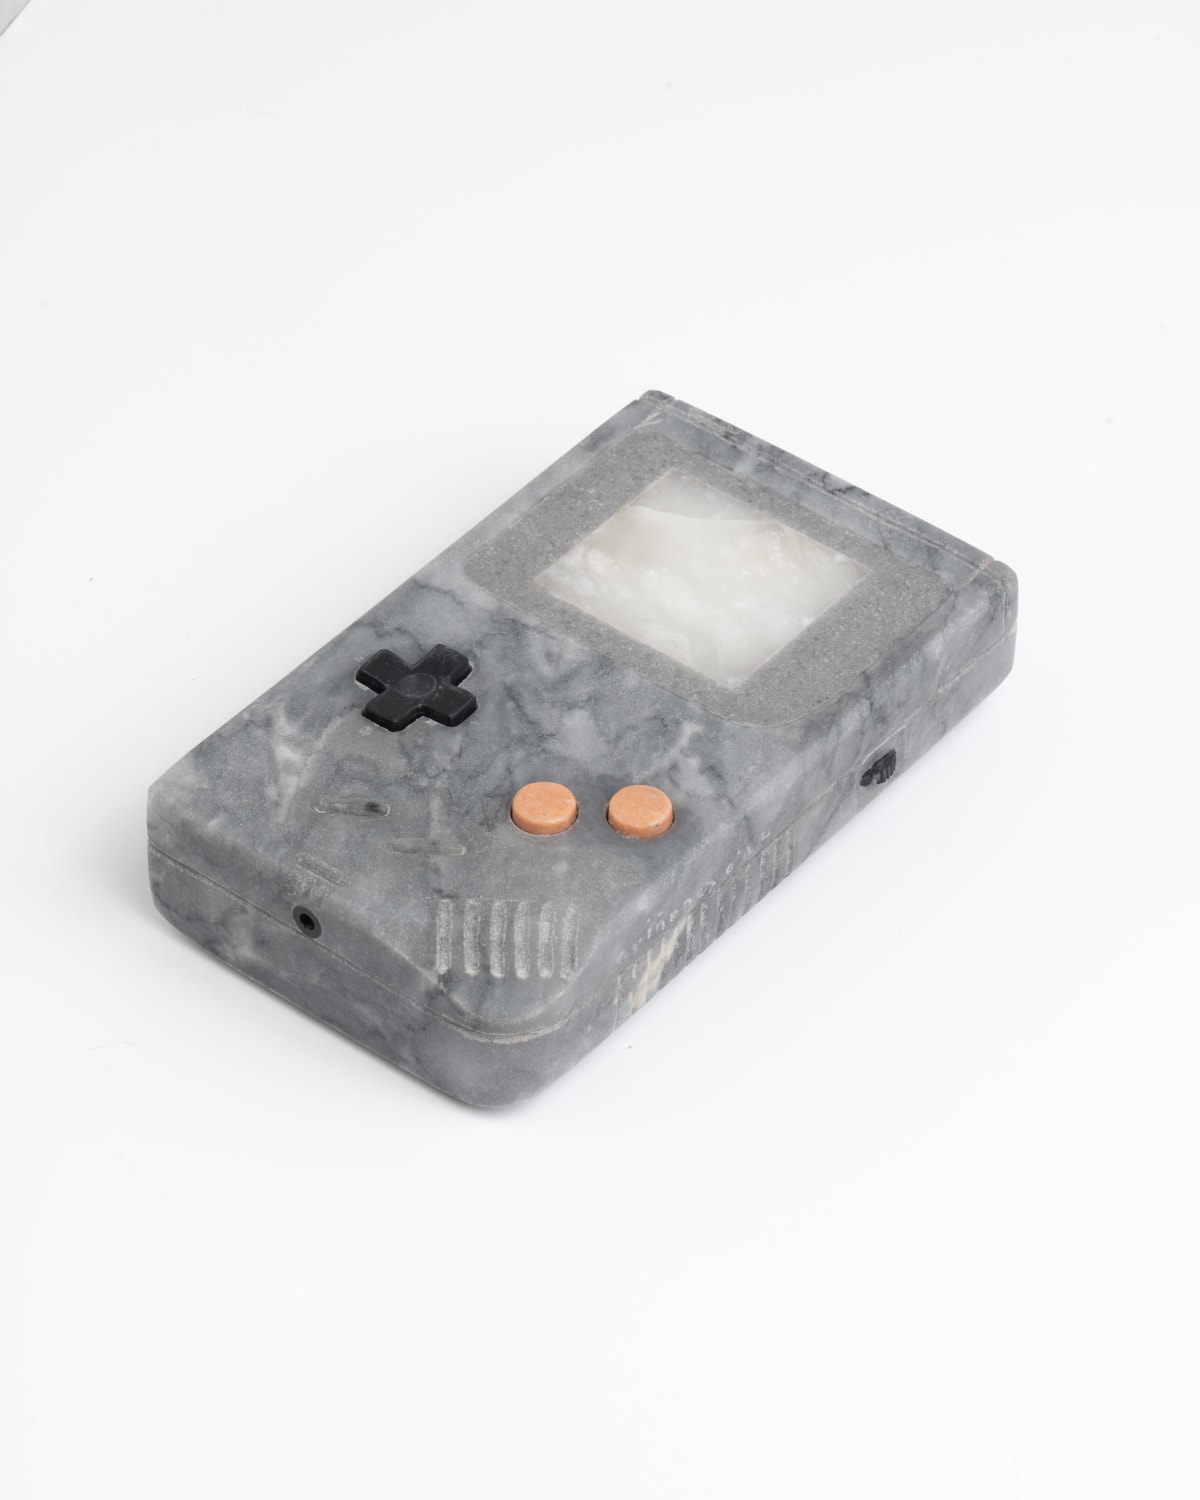 Game Boy. Elogio #5, 2022